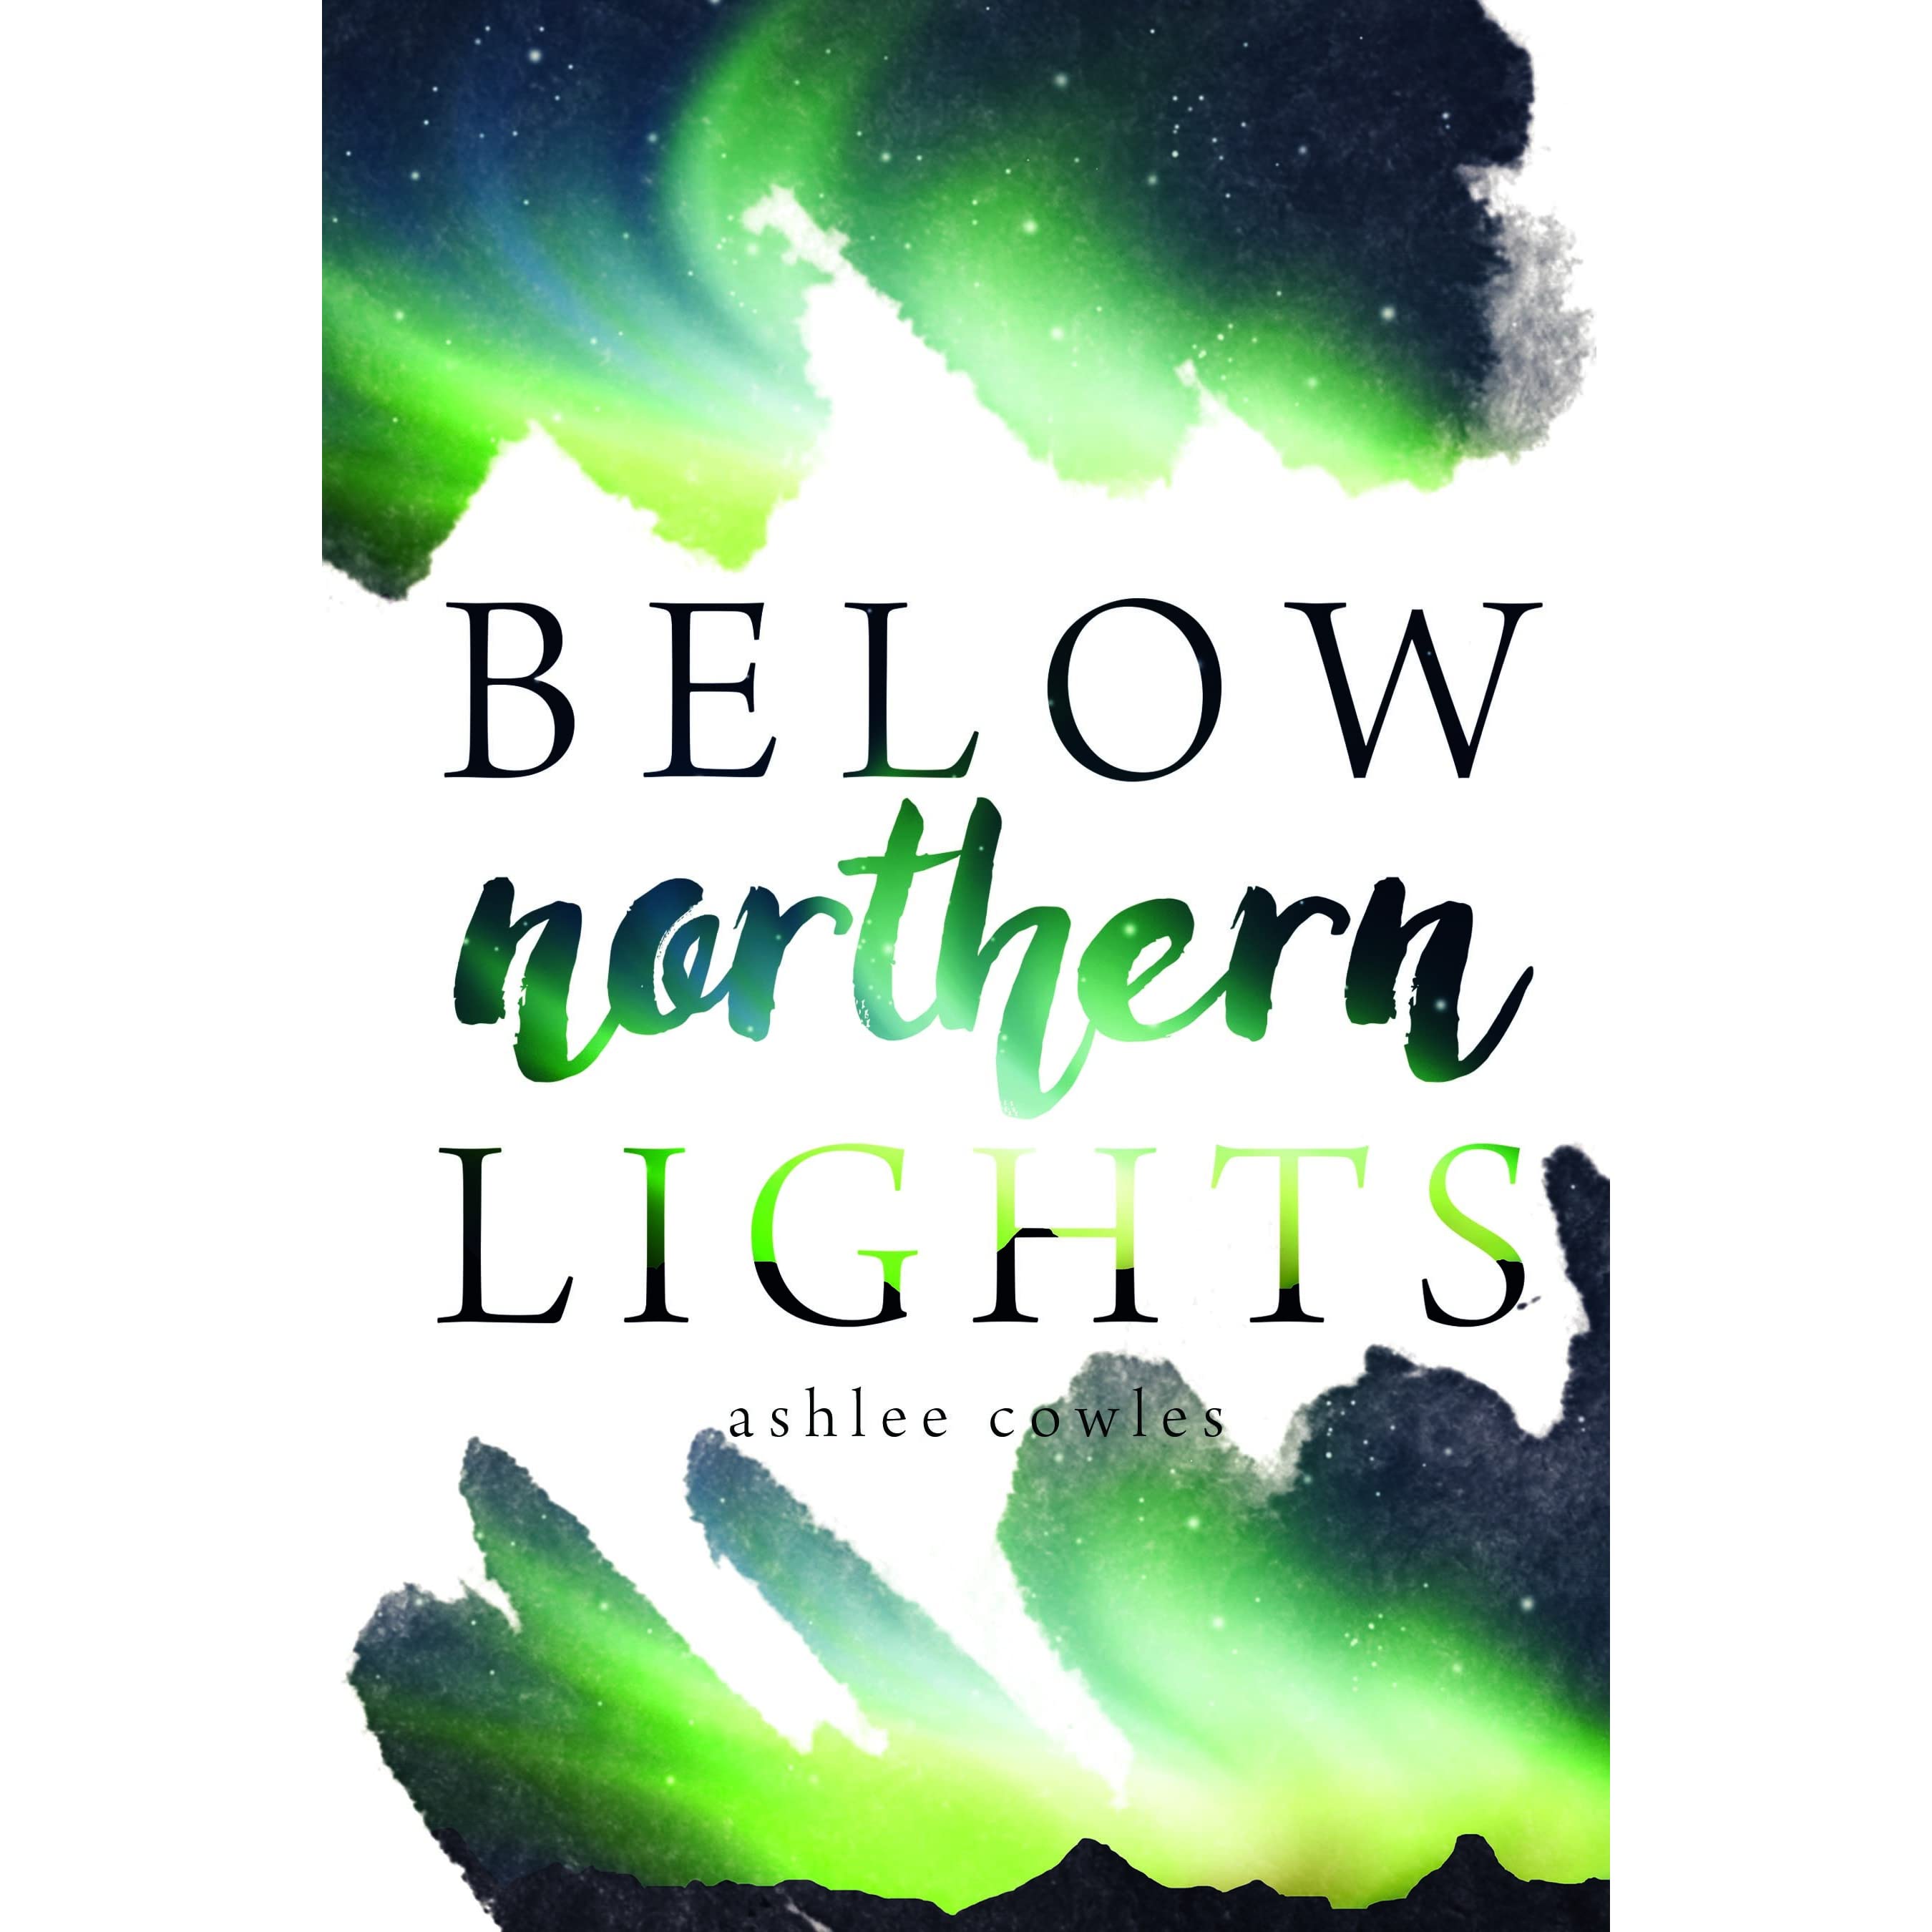 Below Northern Lights